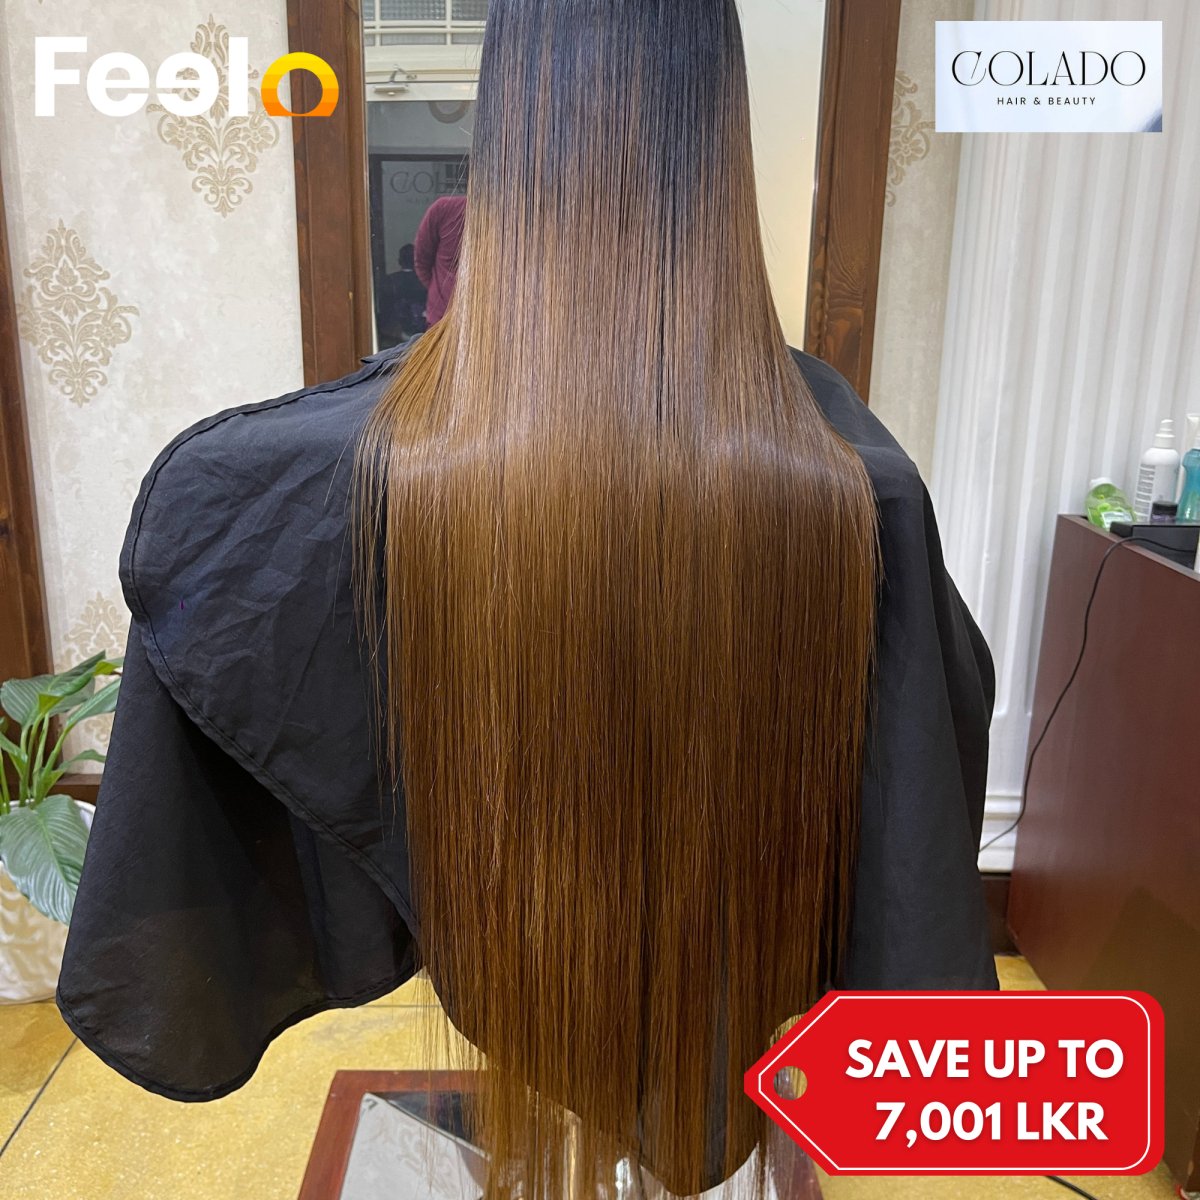 Fabulous Keratin Hair Treatment for 1 person: For different hair lengths - COLADO Hair & Beauty, Nugegoda | Feelo